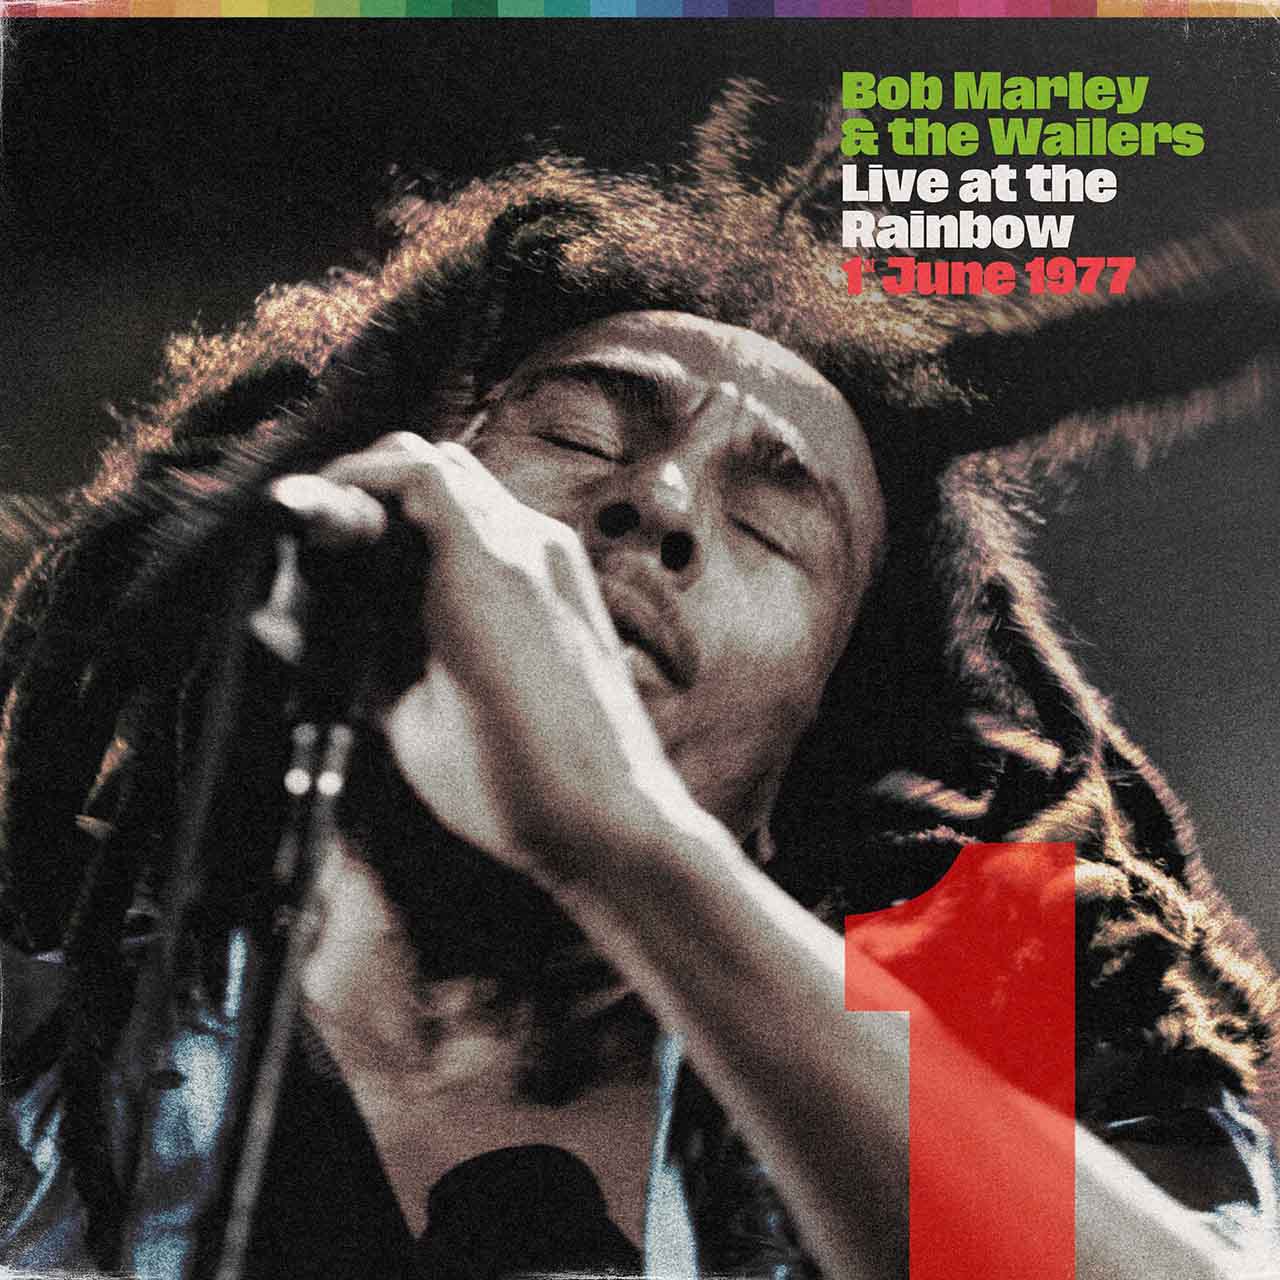 Bob Marley’s triumphant shows in London